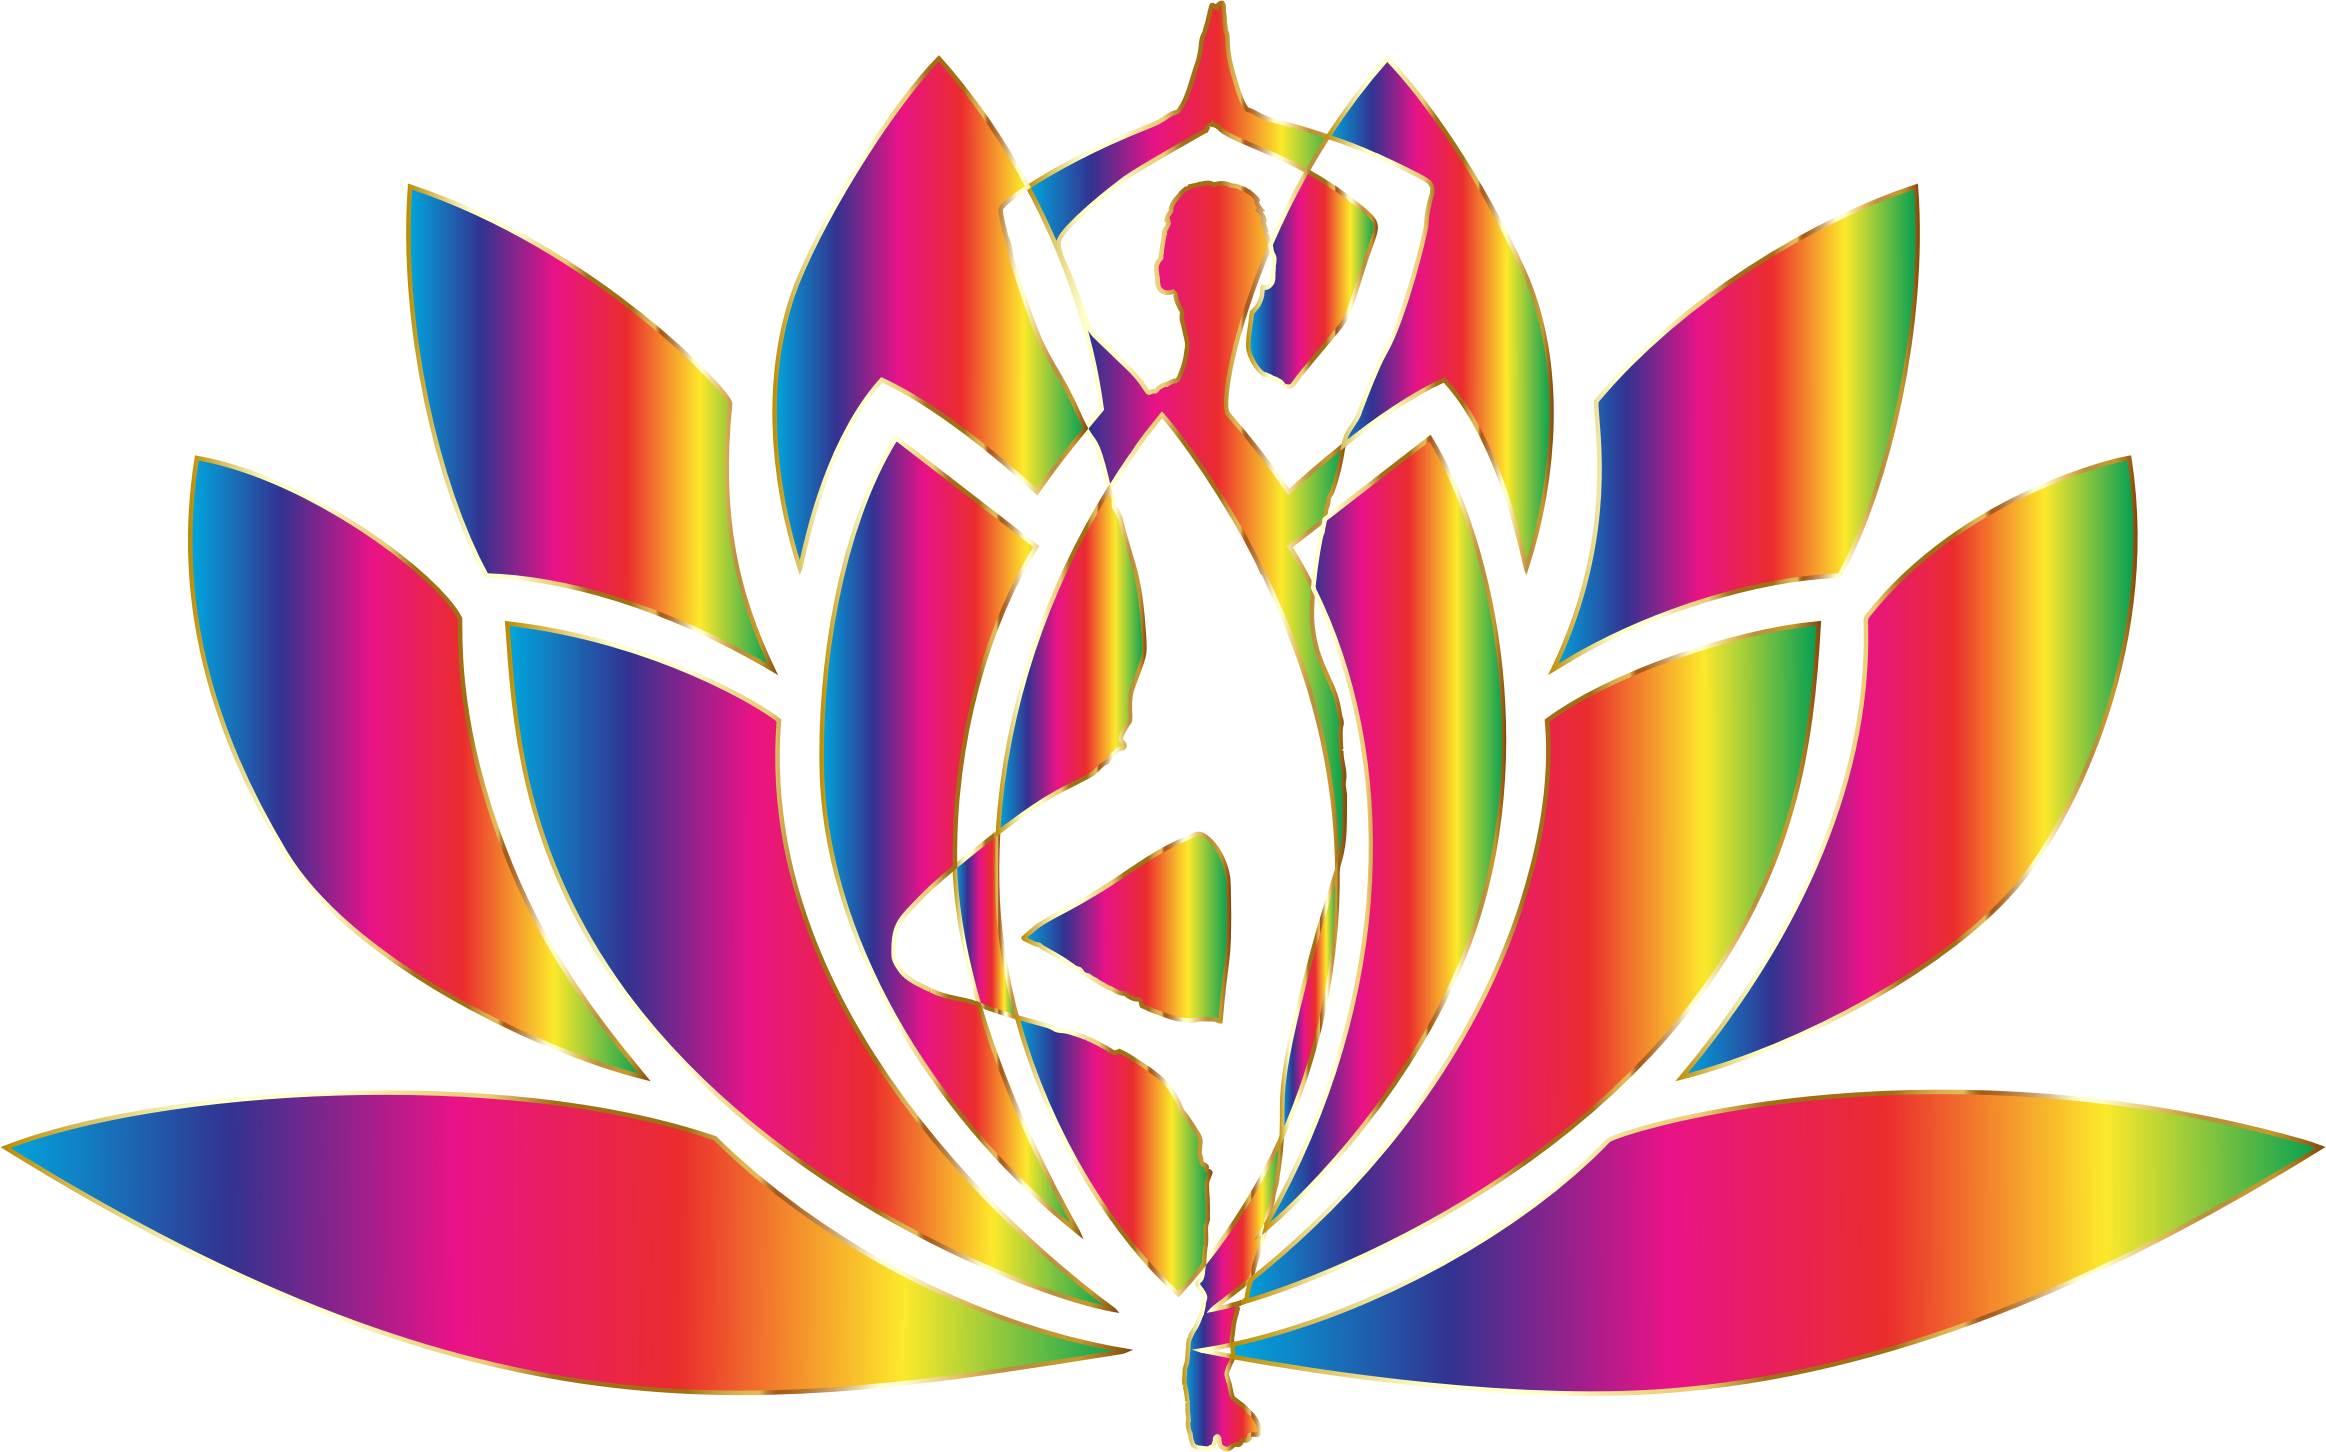 This Free Icons Png Design Of Spectrum Yoga Lotus No - Lotus Silhouette (2326x1452)